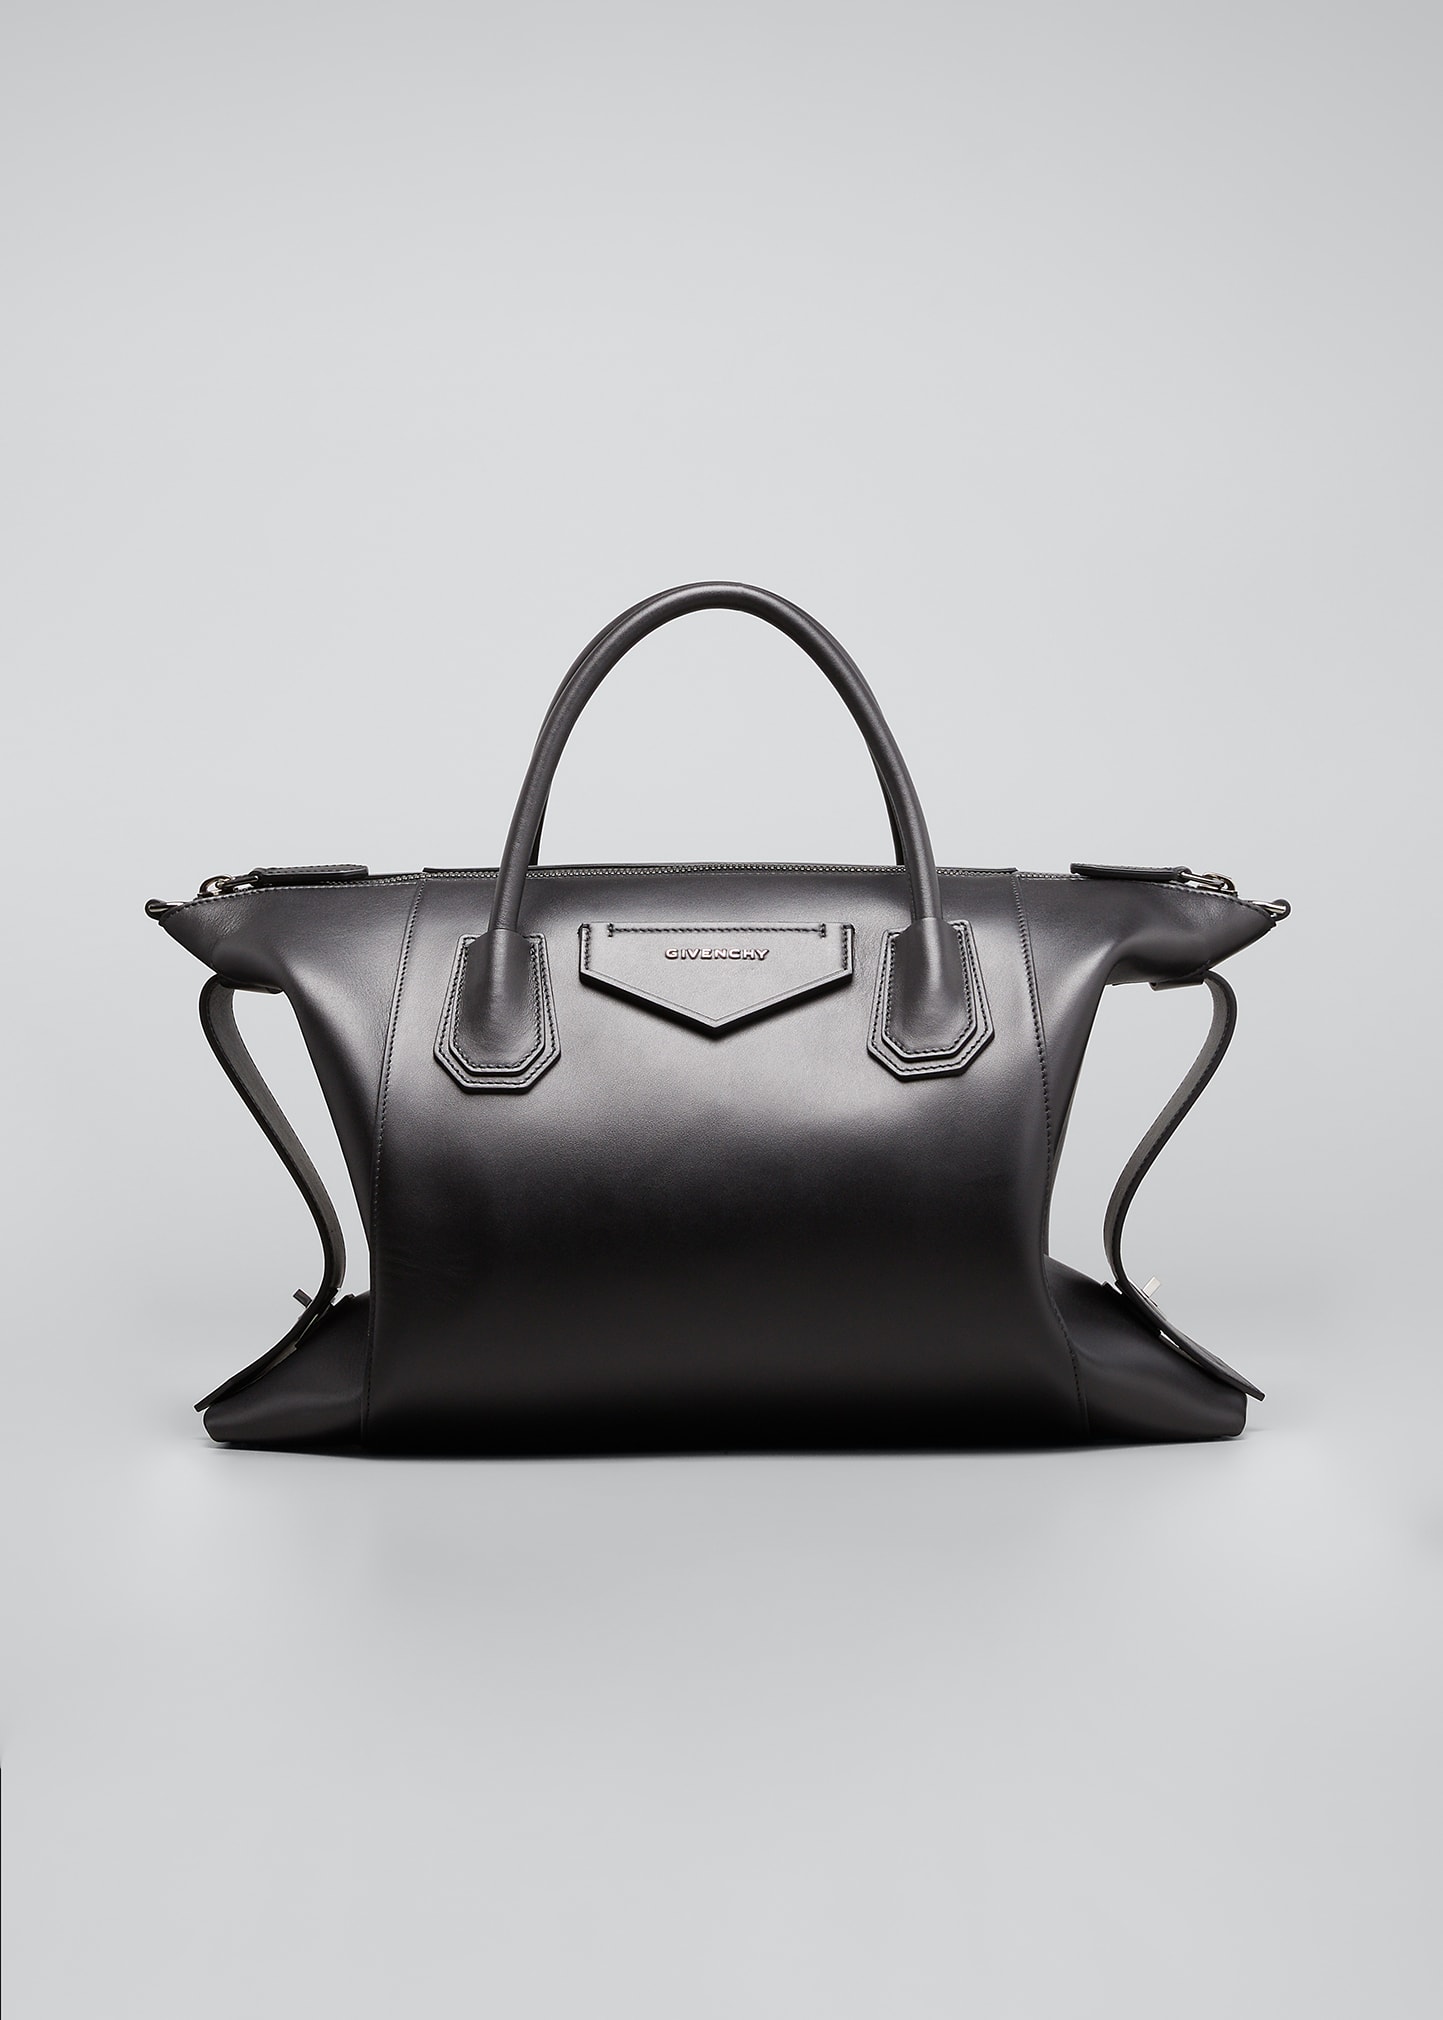 Givenchy Antigona Soft Medium leather tote - ShopStyle Satchels & Top  Handle Bags